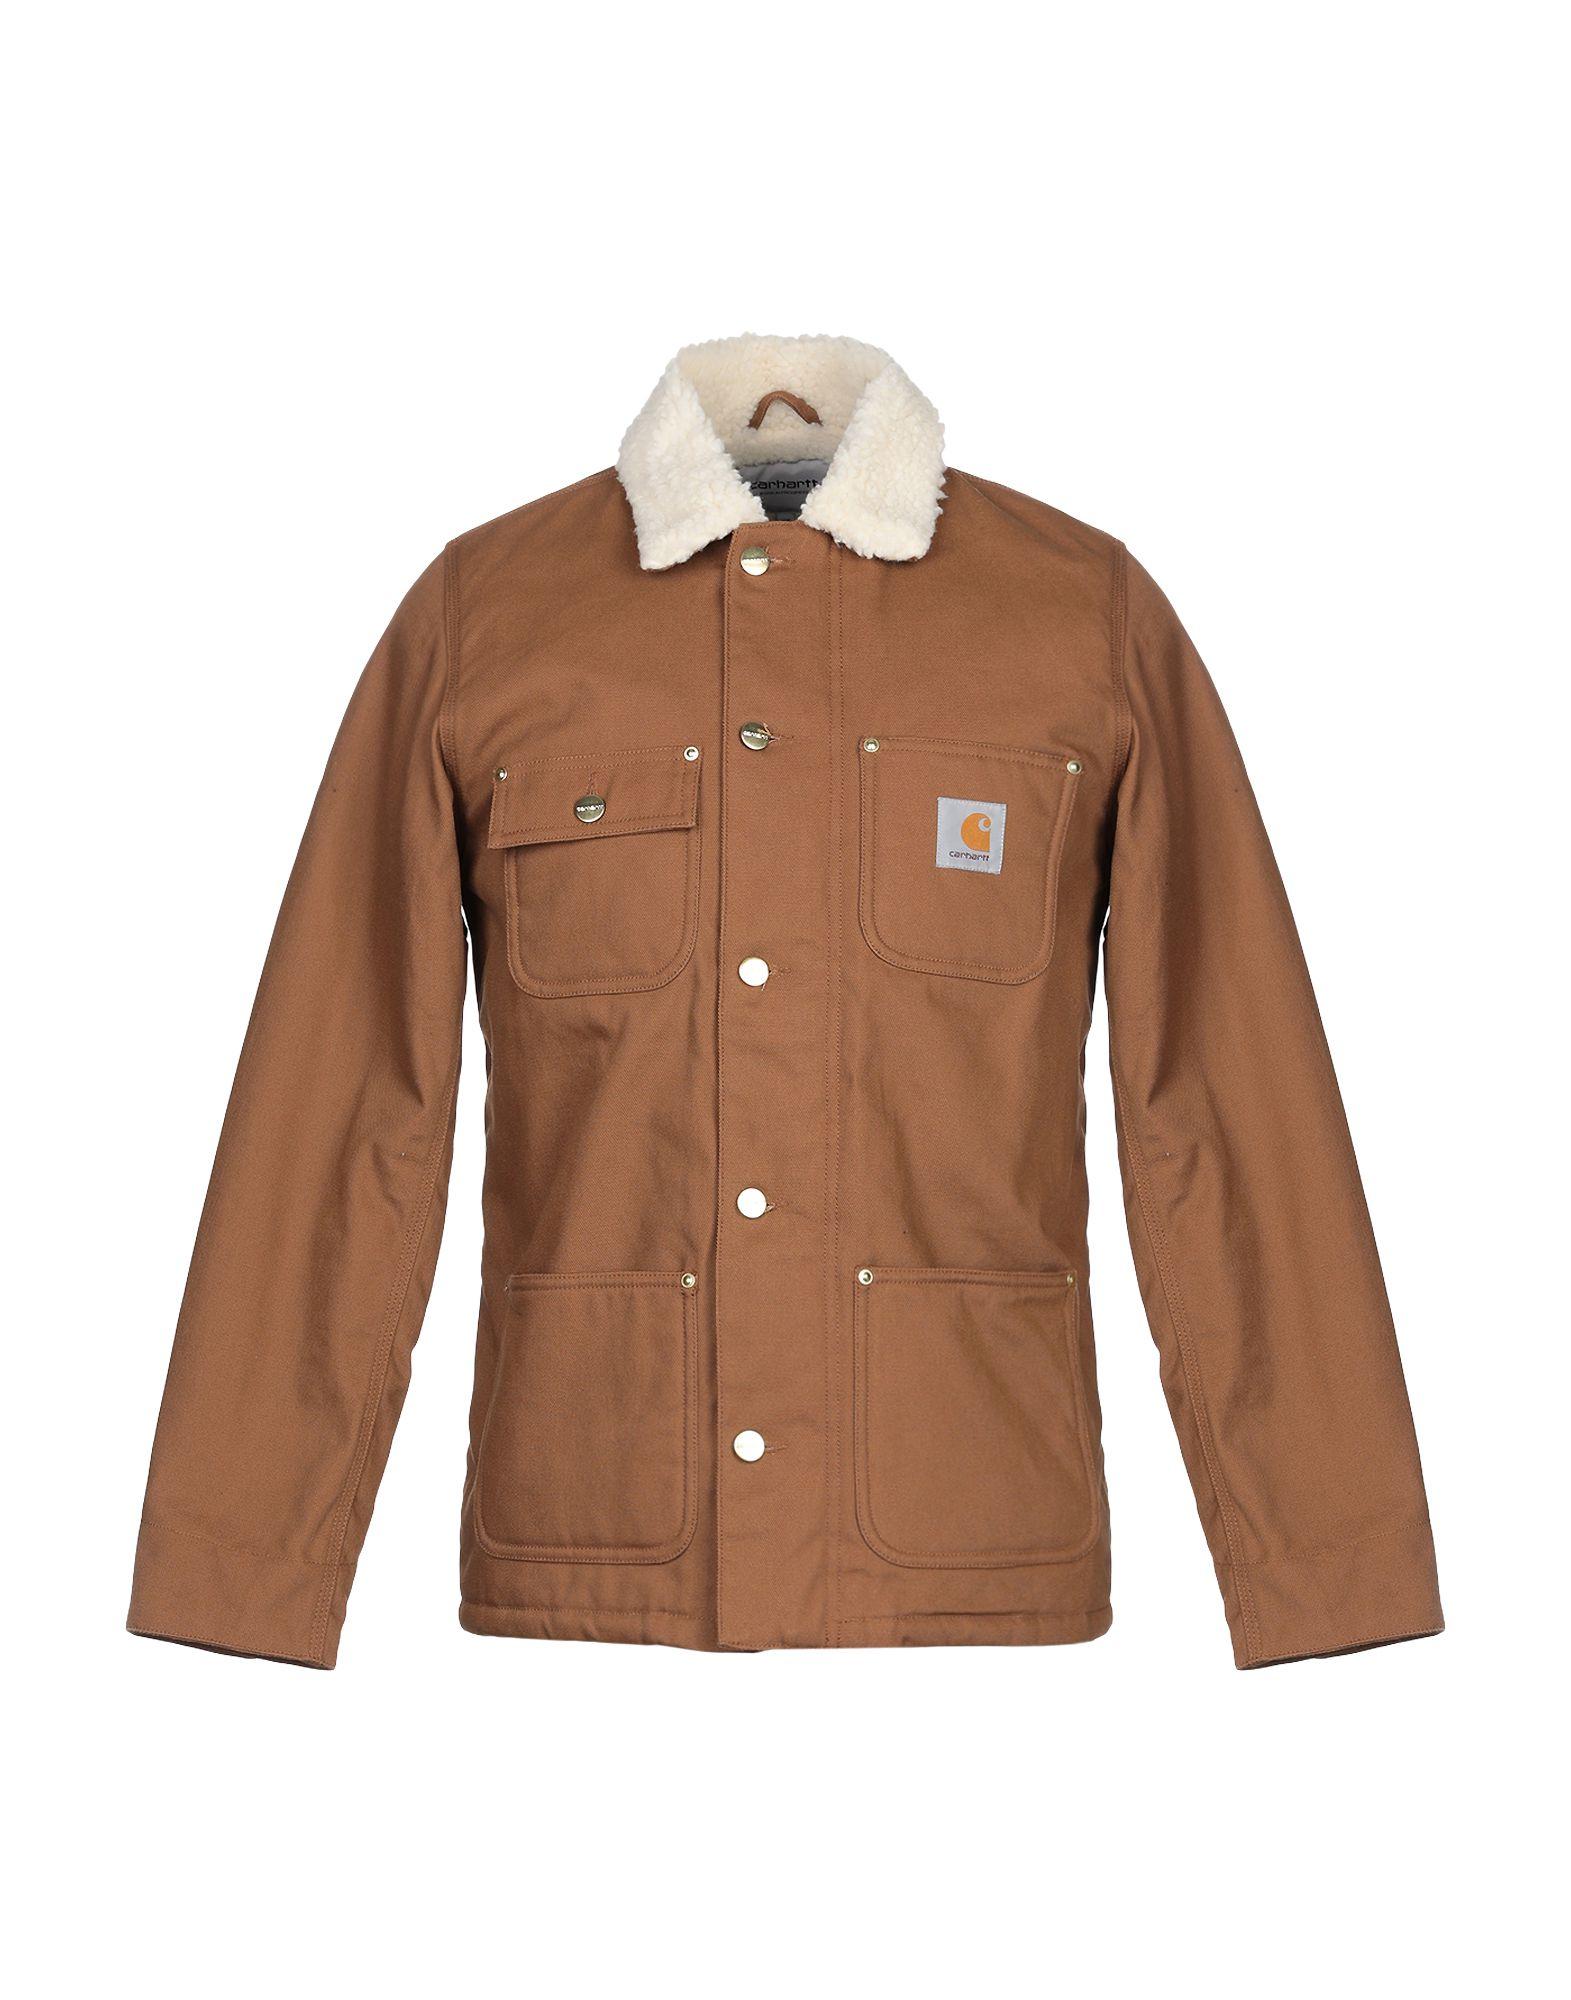 Carhartt Jacket in Brown for Men - Lyst